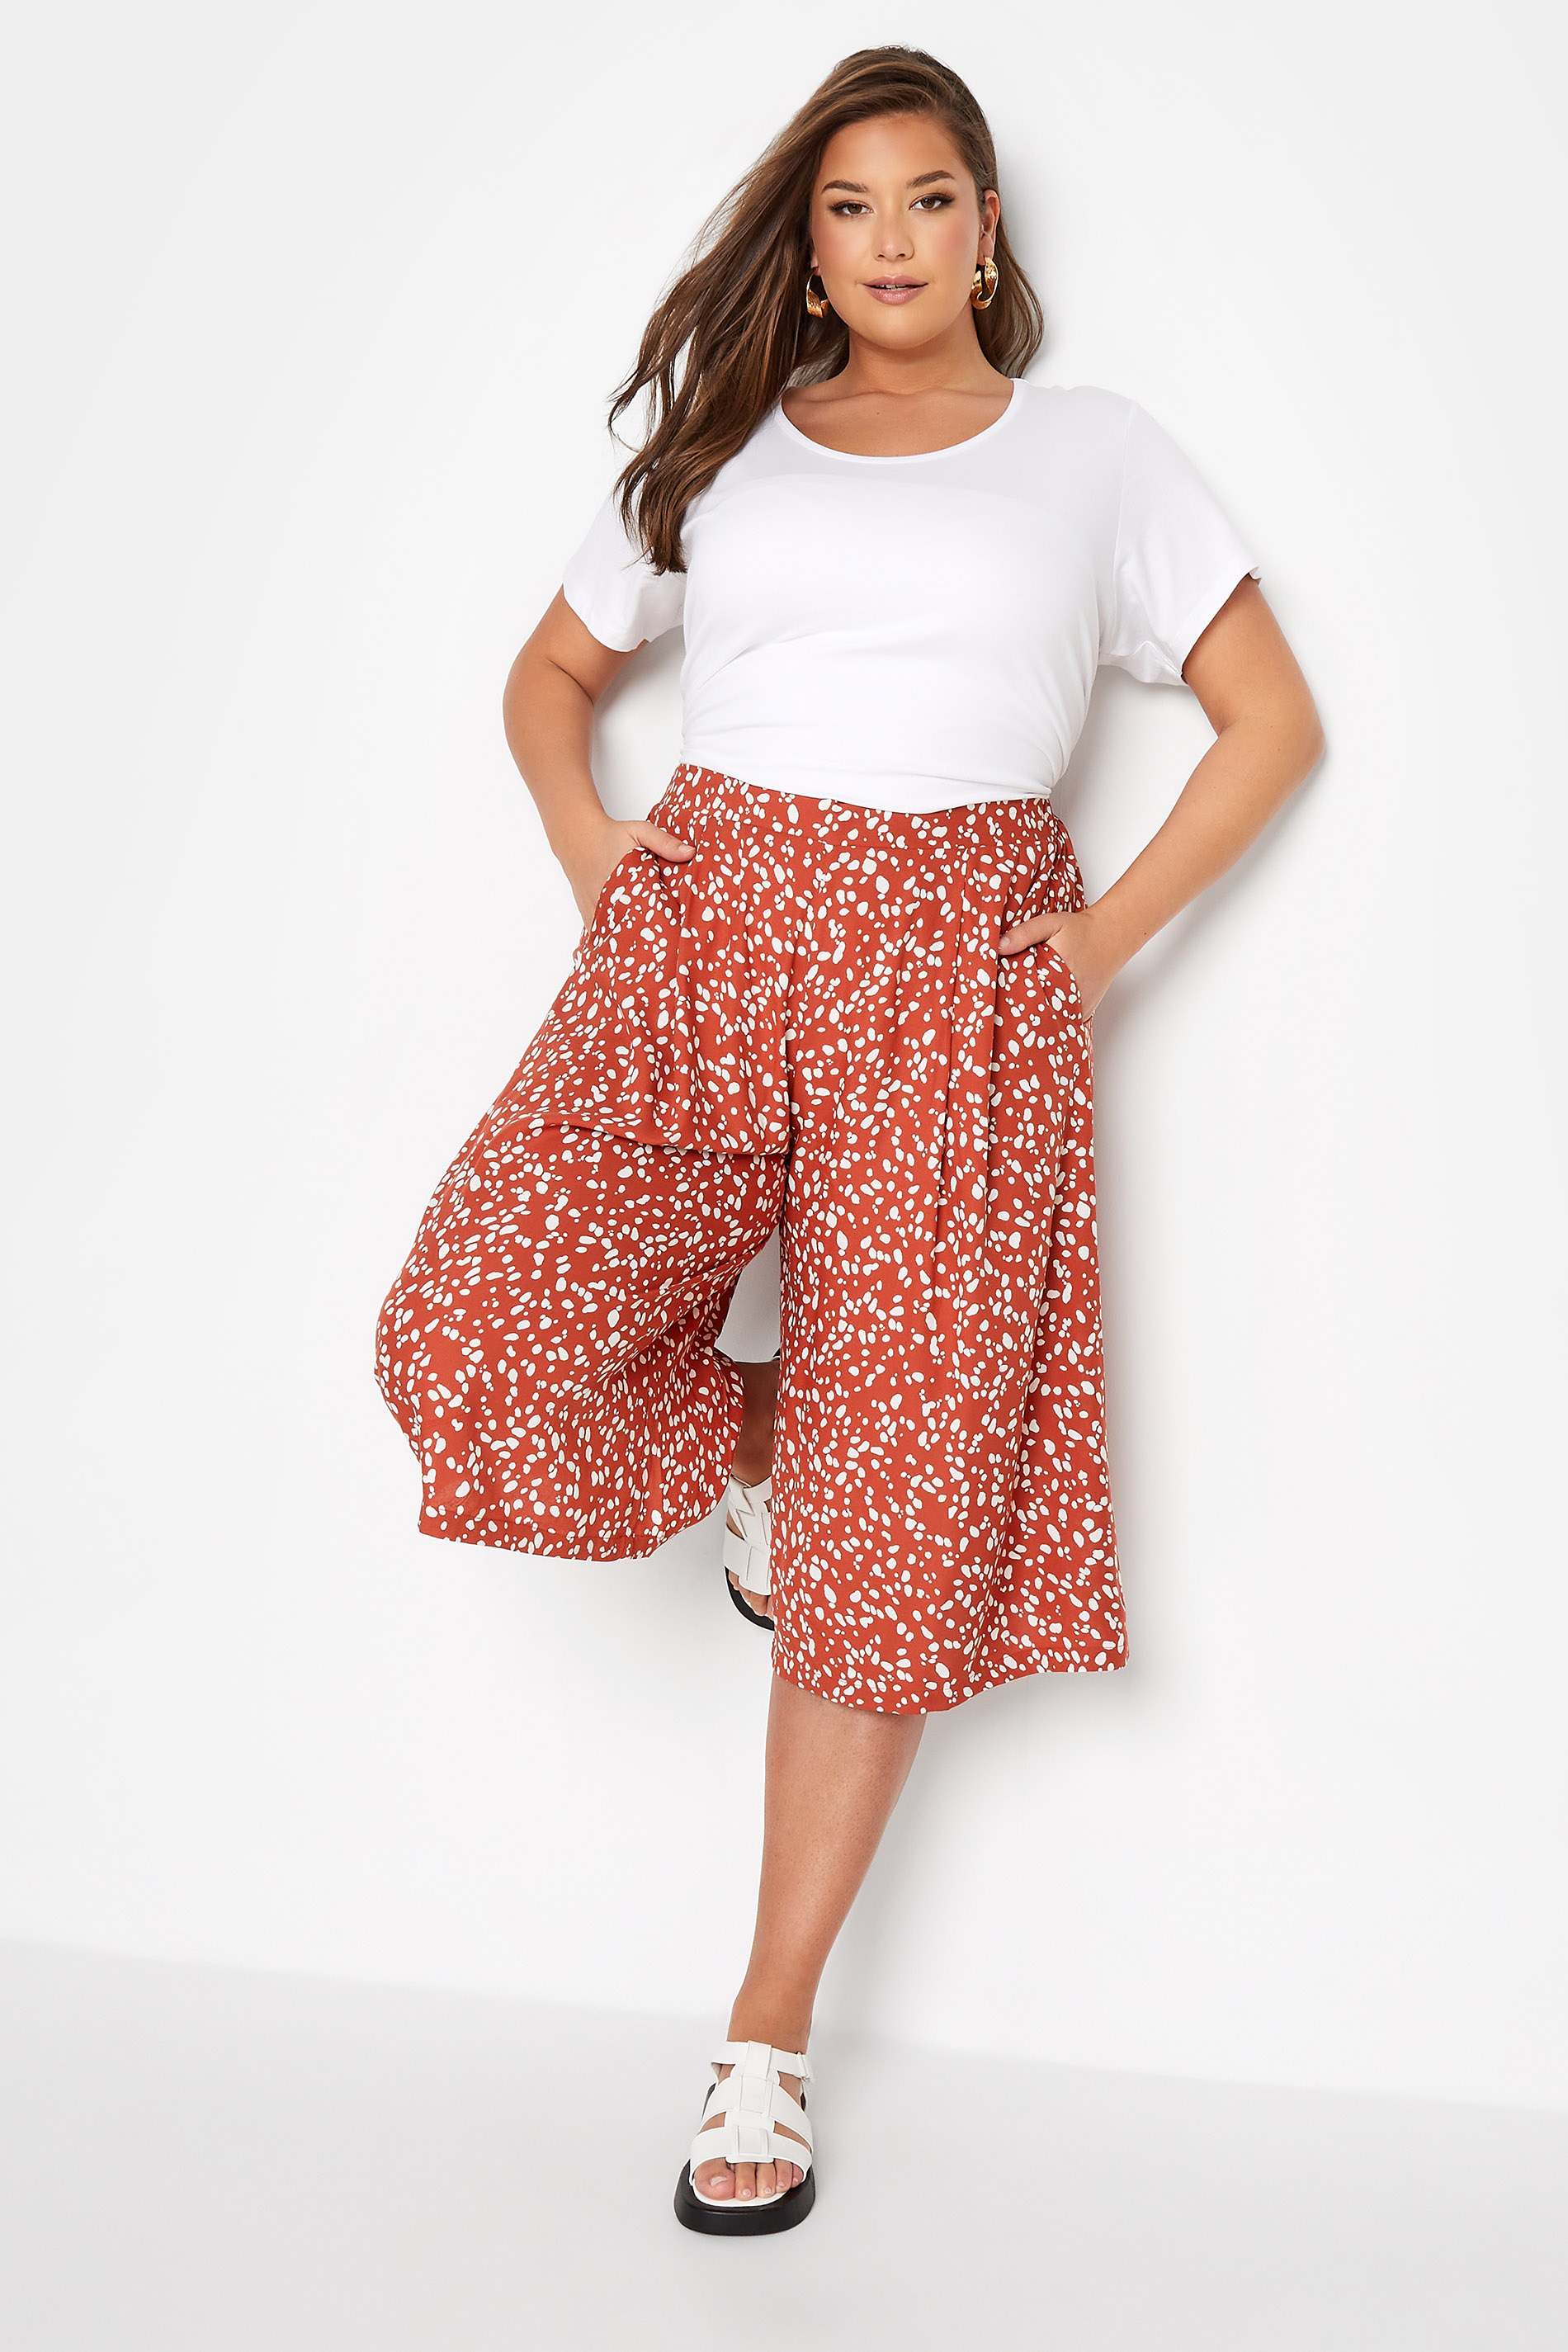 Grande taille  Pantalons Grande taille  Pantacourts | Jupe-Culotte Orange Design Dalmatien - VU79830